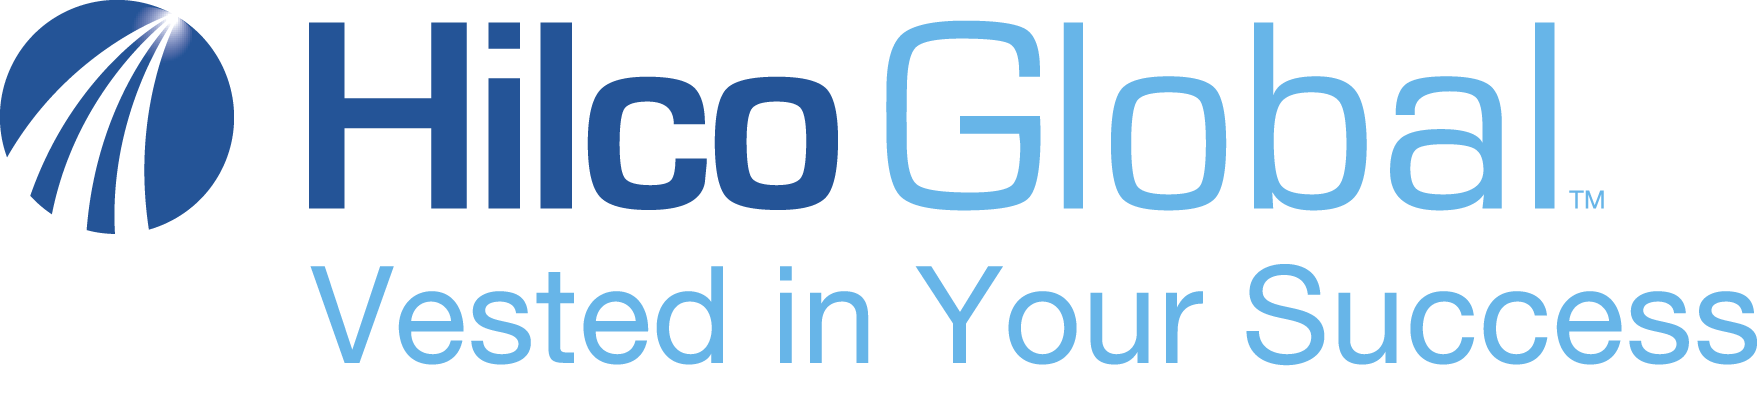 Hilco Global Logo